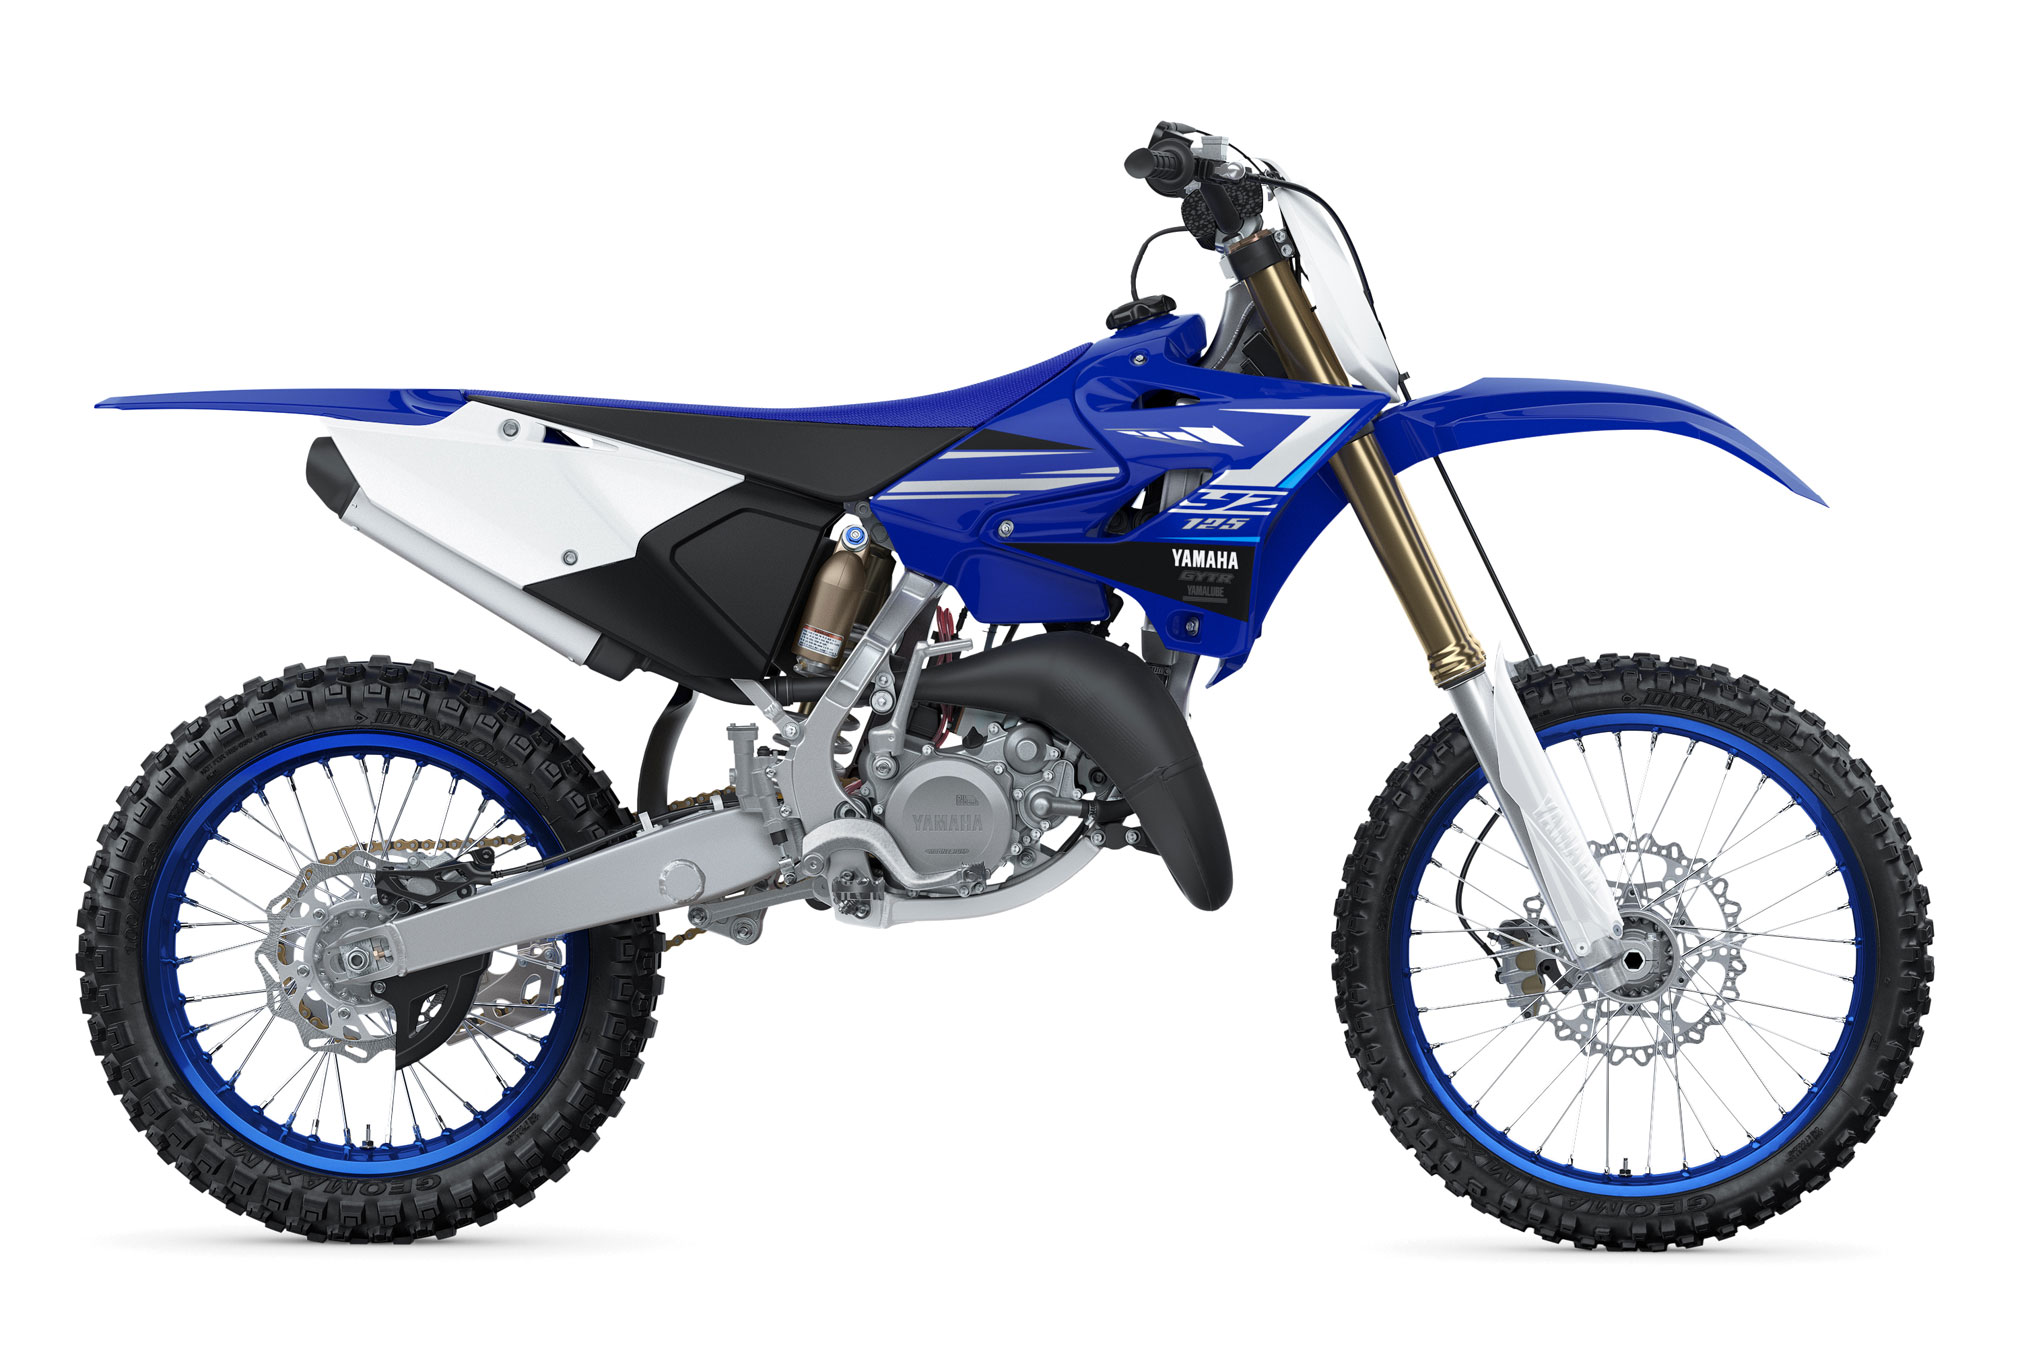 2020 Yamaha YZ125 Guide • Total Motorcycle